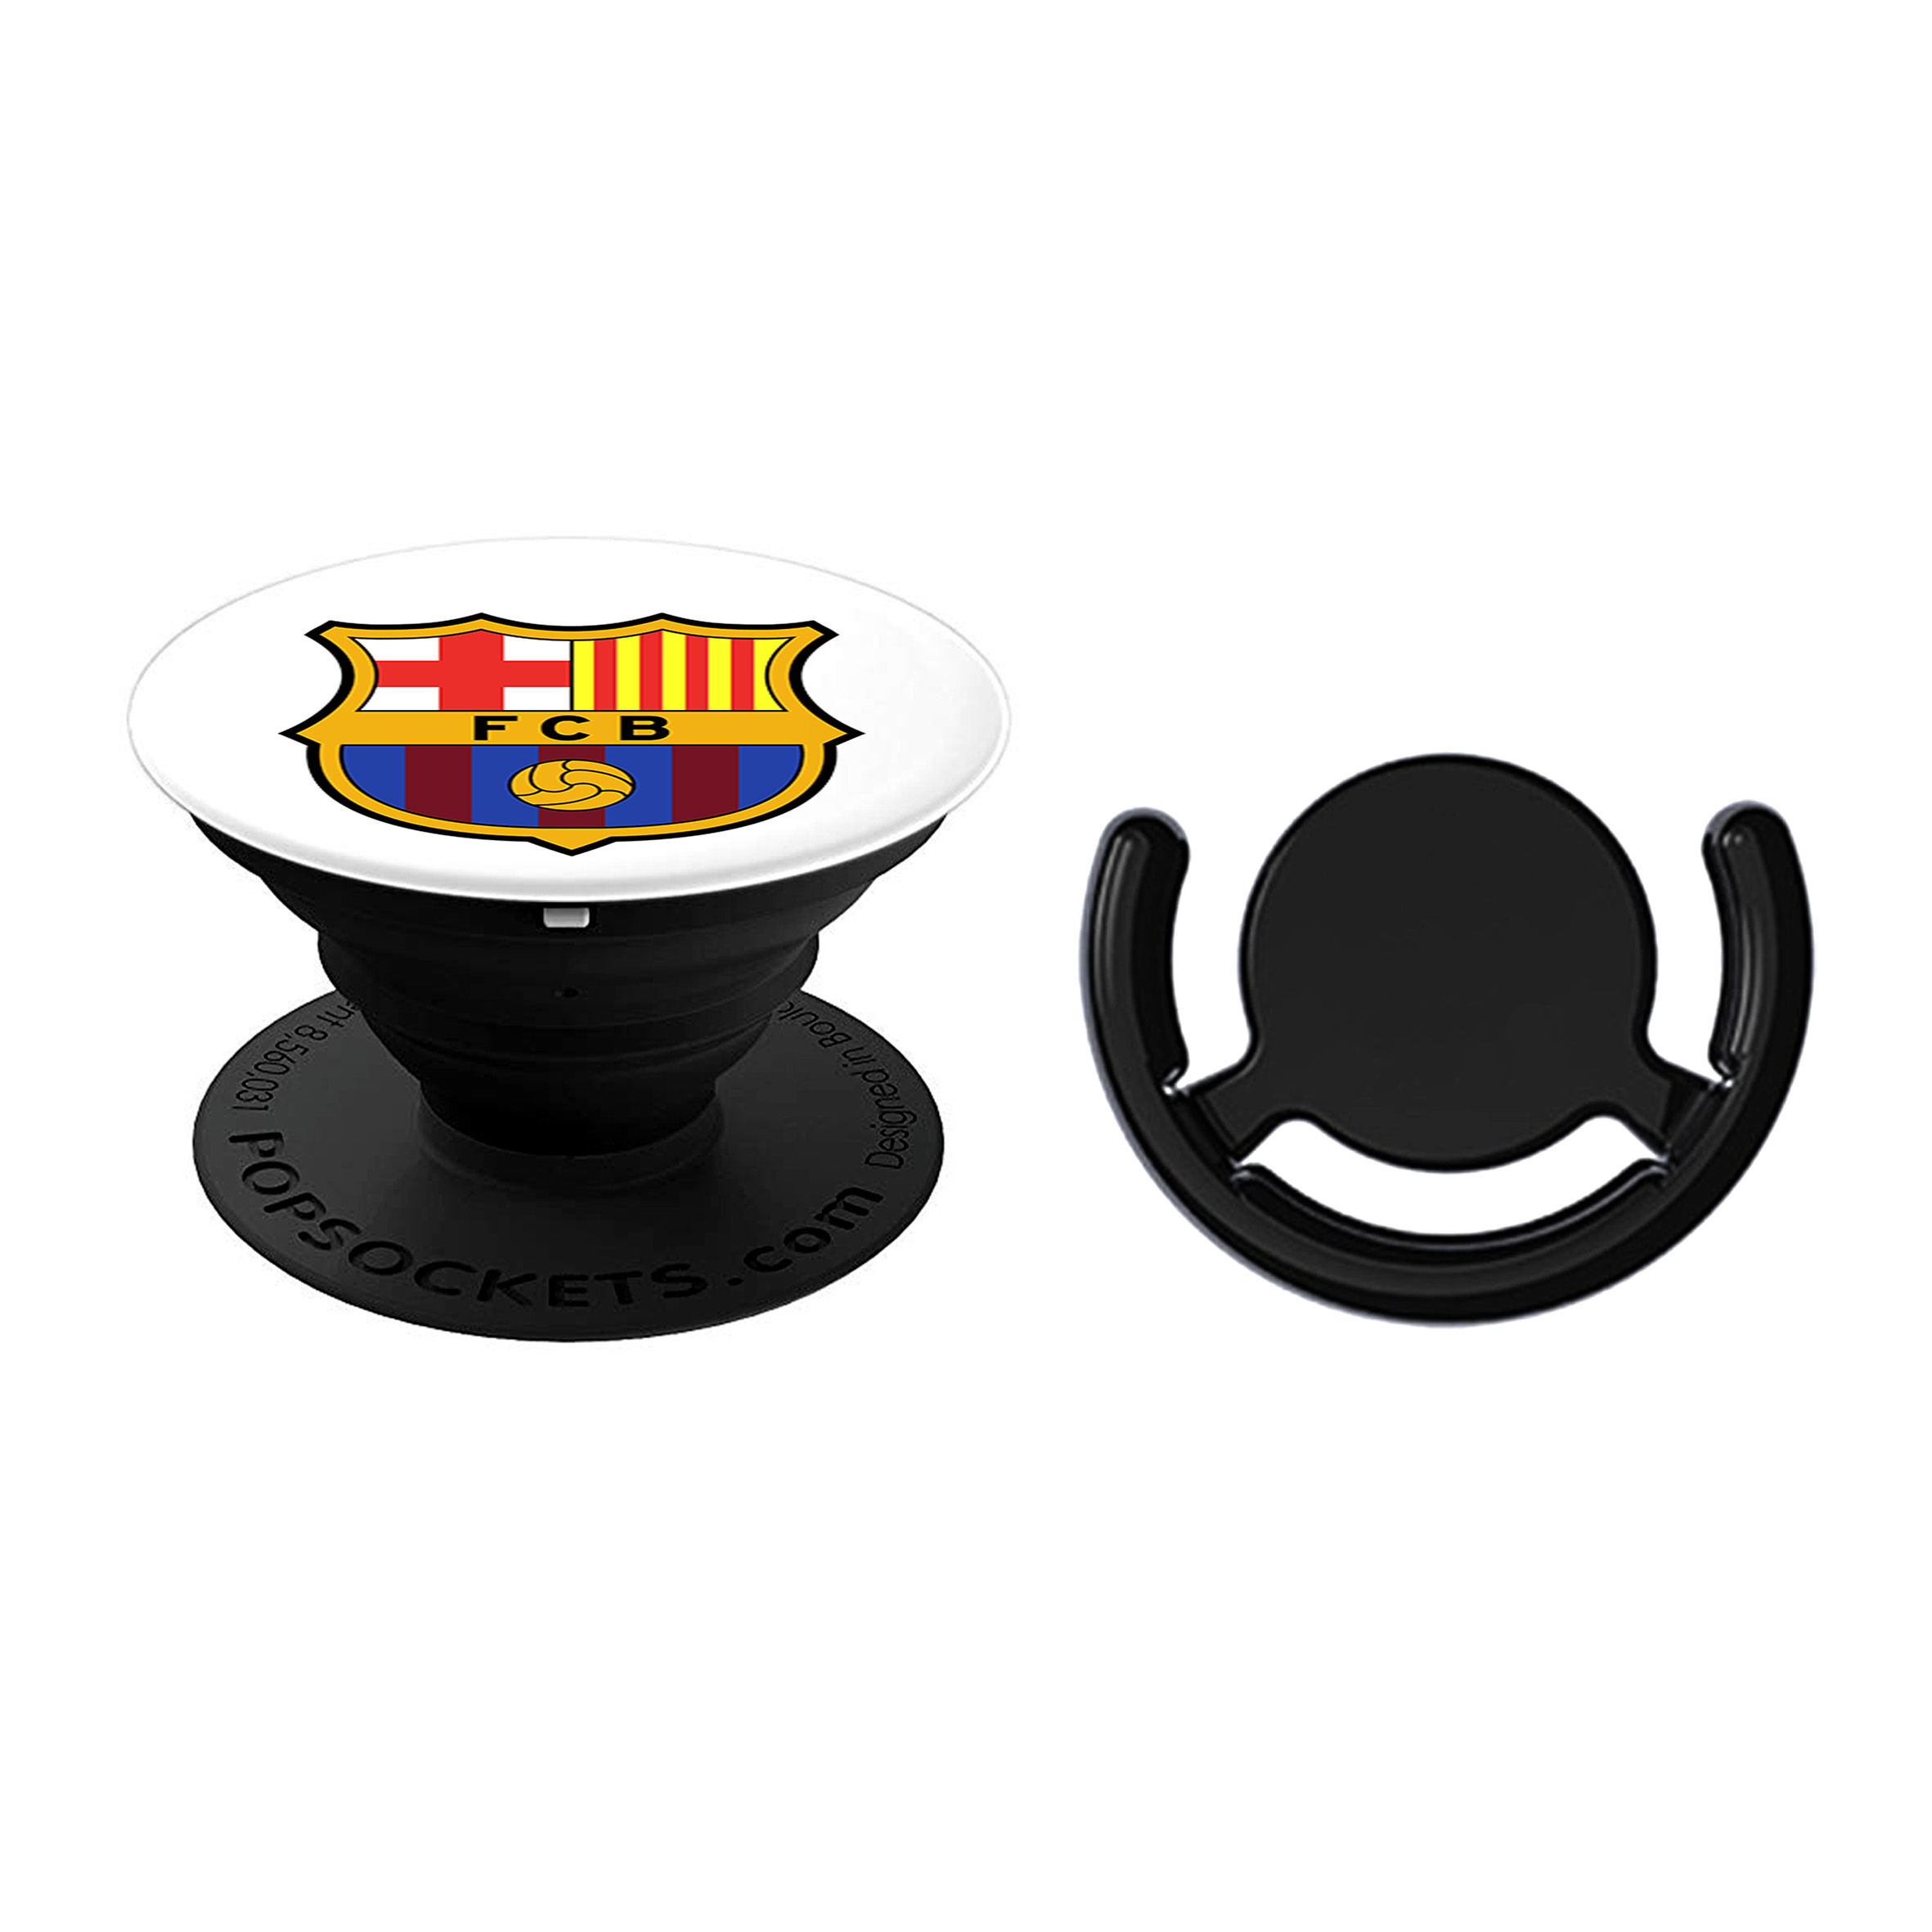 پایه نگهدارنده گوشی موبایل پاپ سوکت طرح تیم فوتبال بارسلونا کد ps2